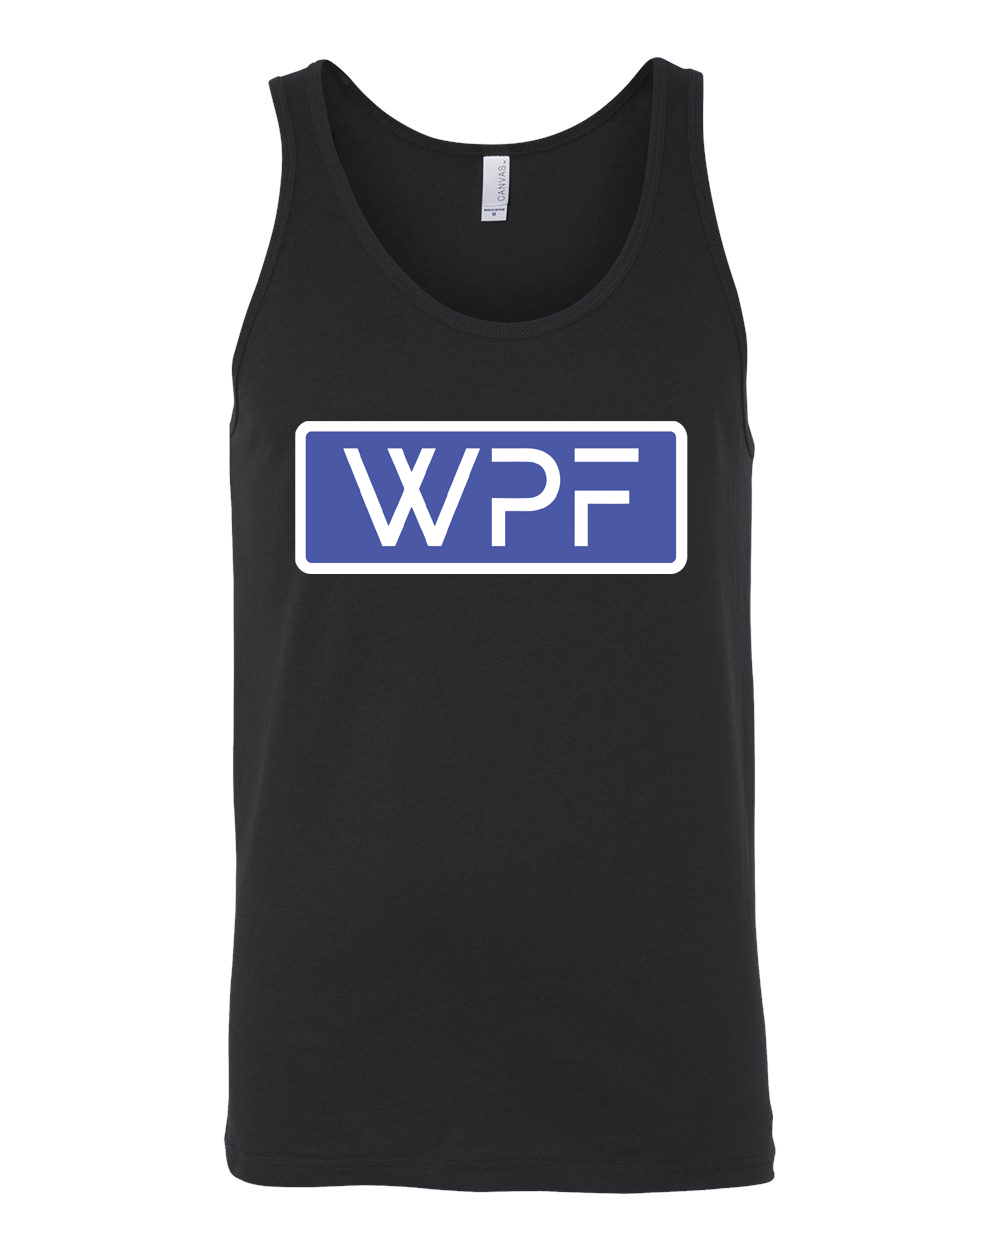 WPF Tank Top - Black